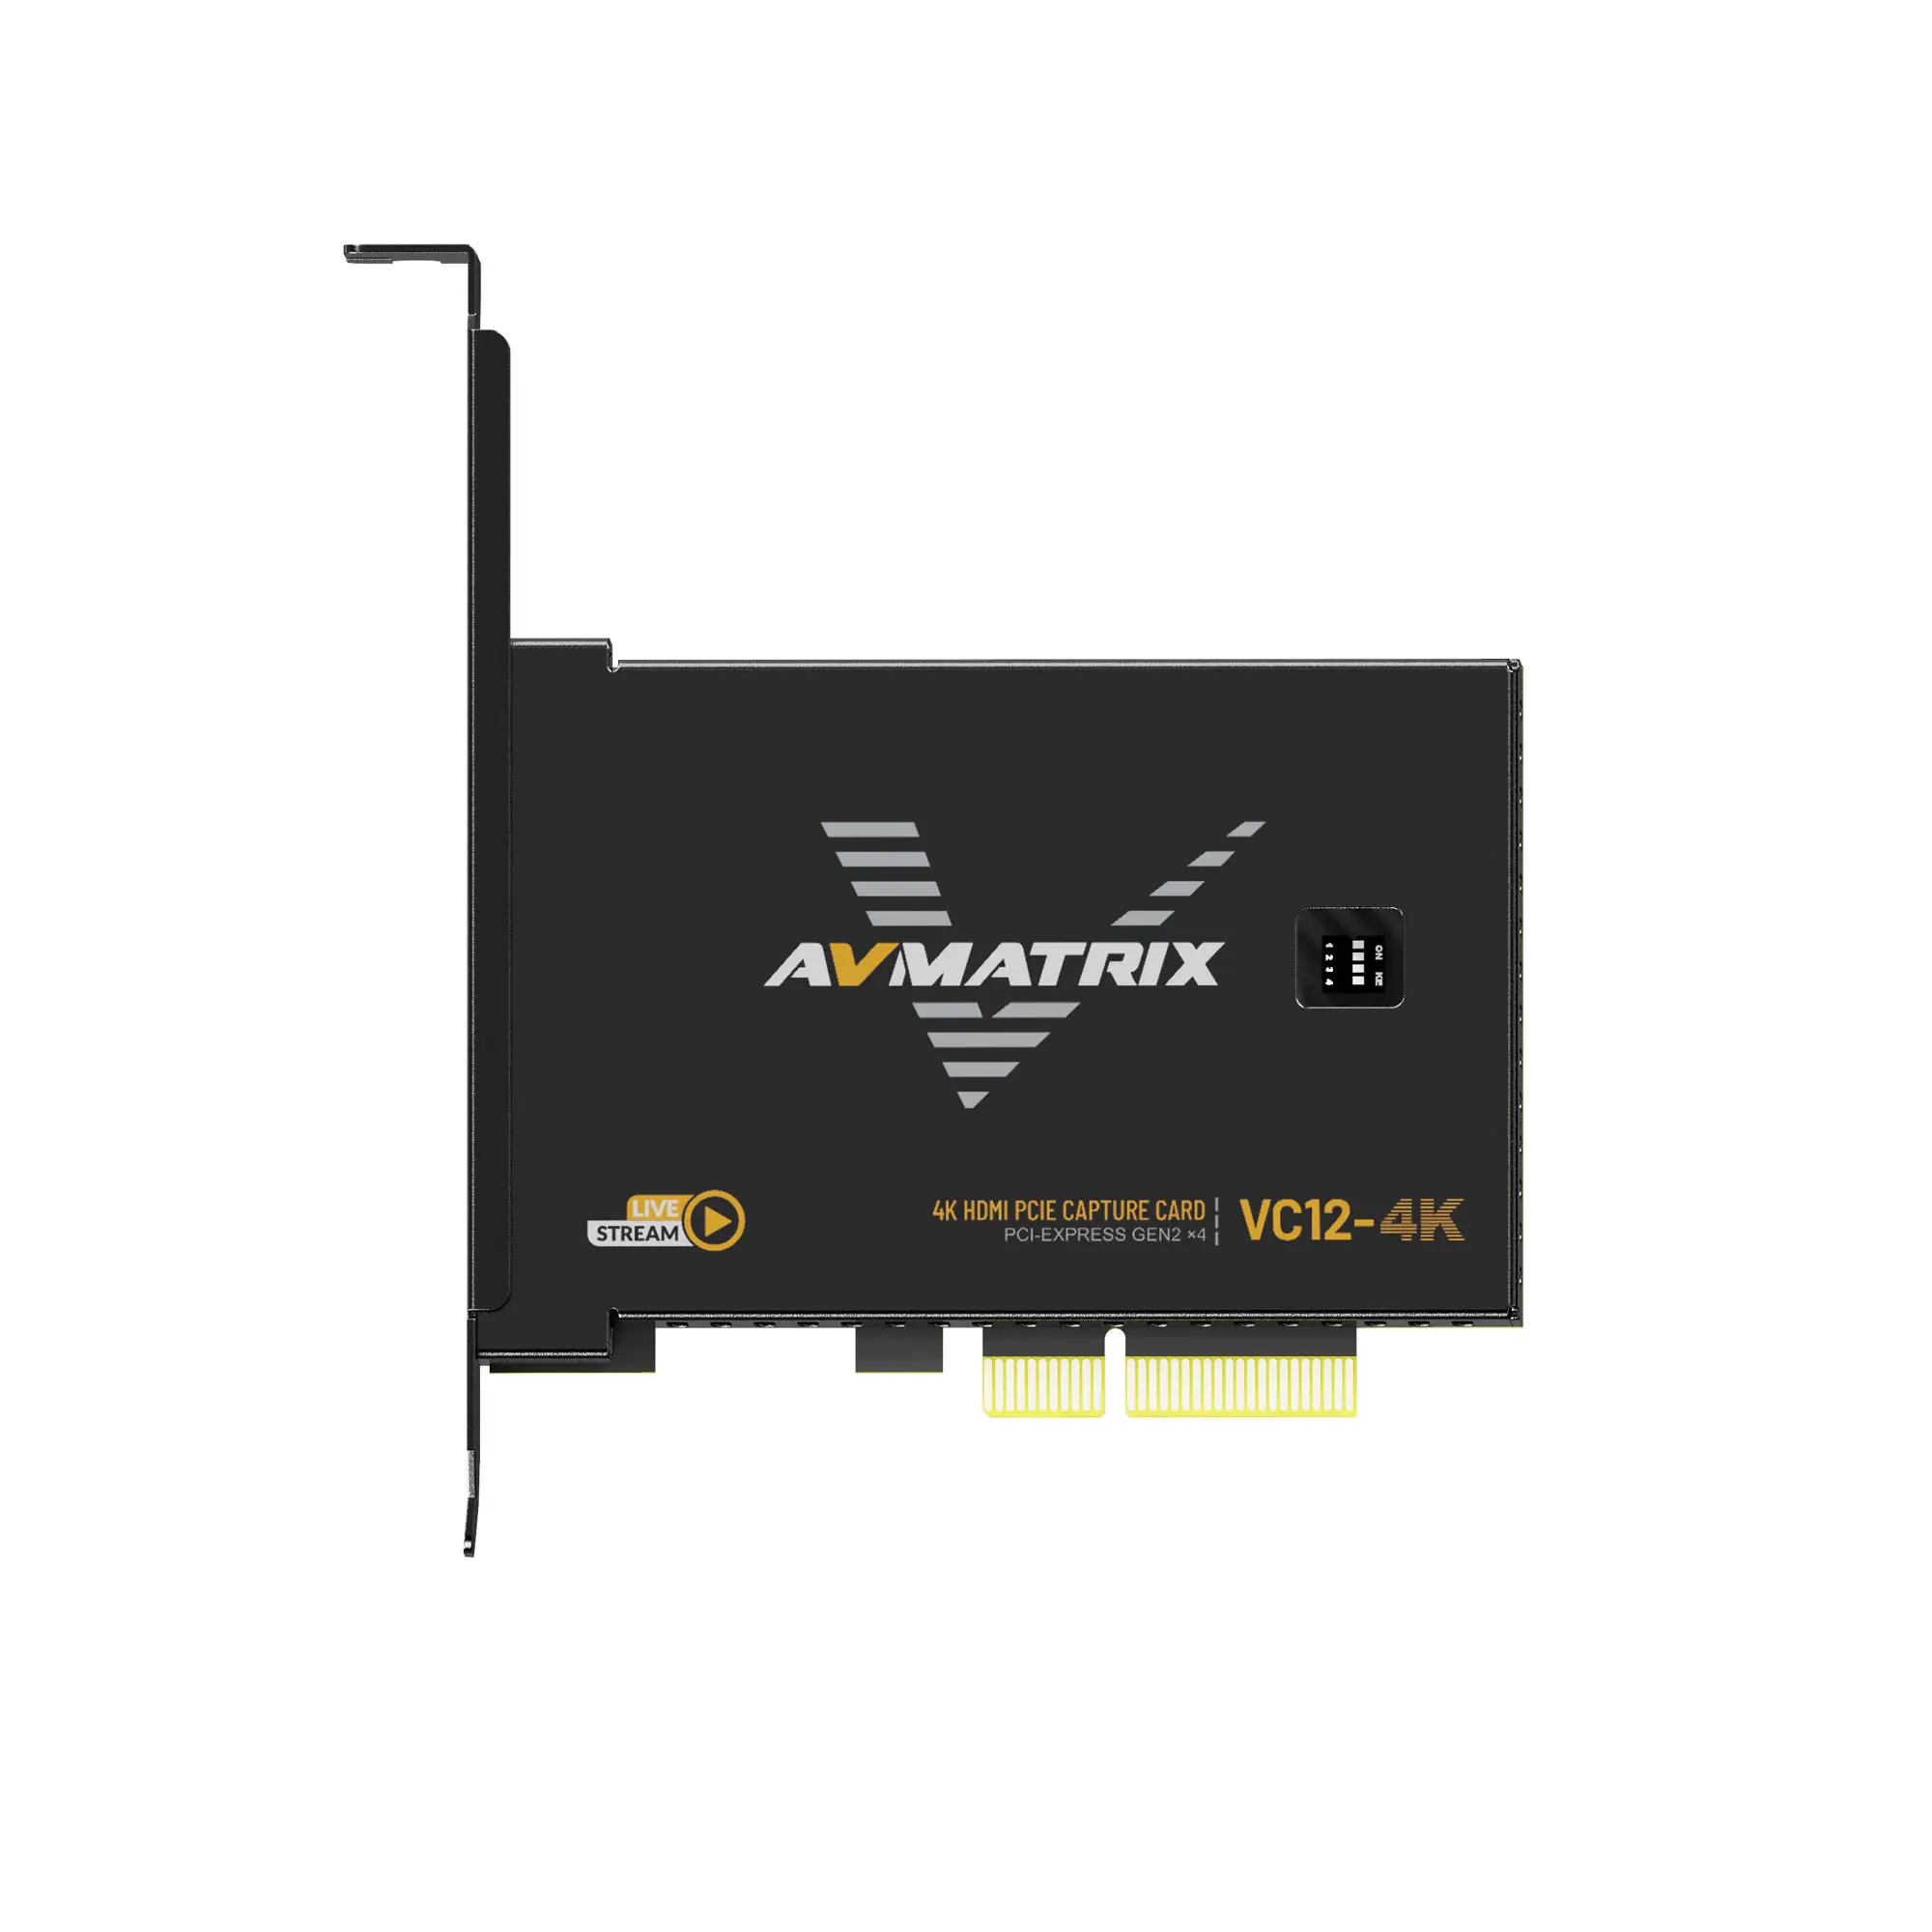 AVMATRIX VC12-4K, 4K HDMI 2.0 Loop Out Bandwidth Tinggi Latensi Ultra Rendah UHD Recording Gaming Streaming Kartu Penangkap PCIE PCIe